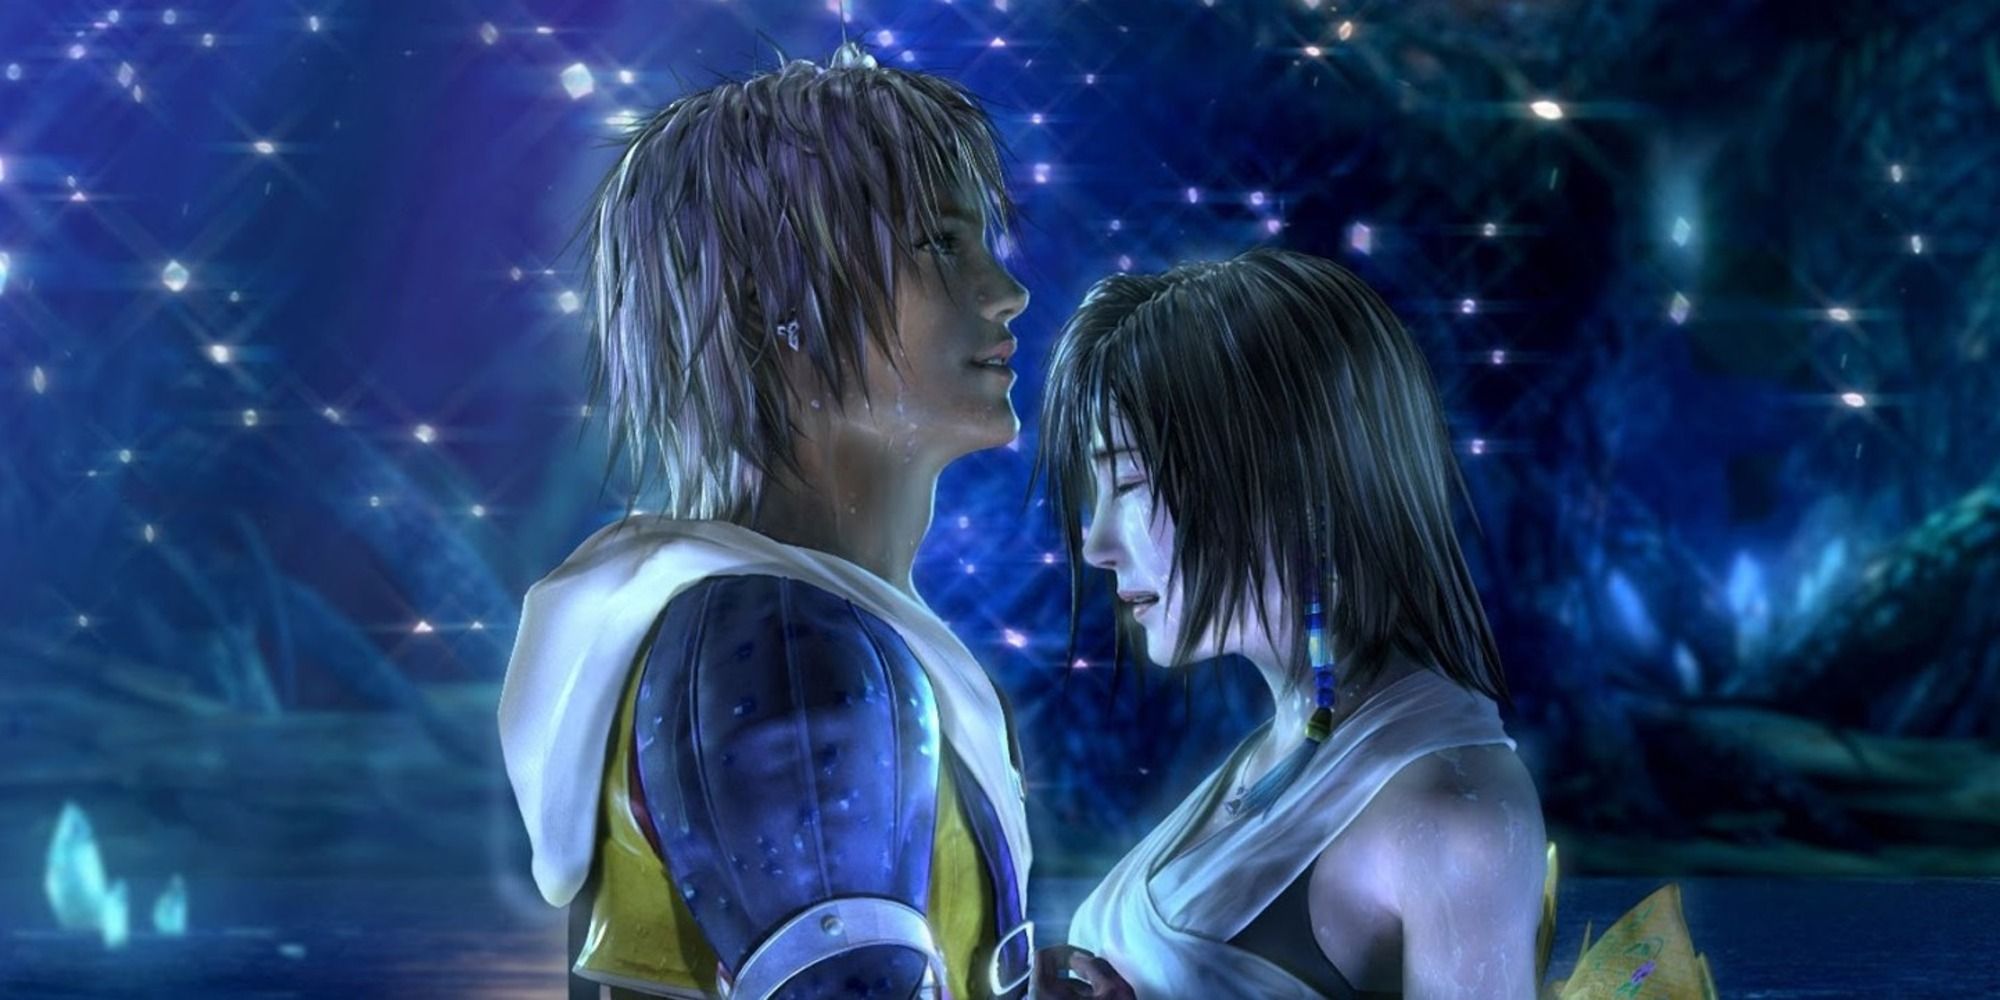 Final Fantasy X 10 cutscene screenshot containing Tidus and Yuna in water